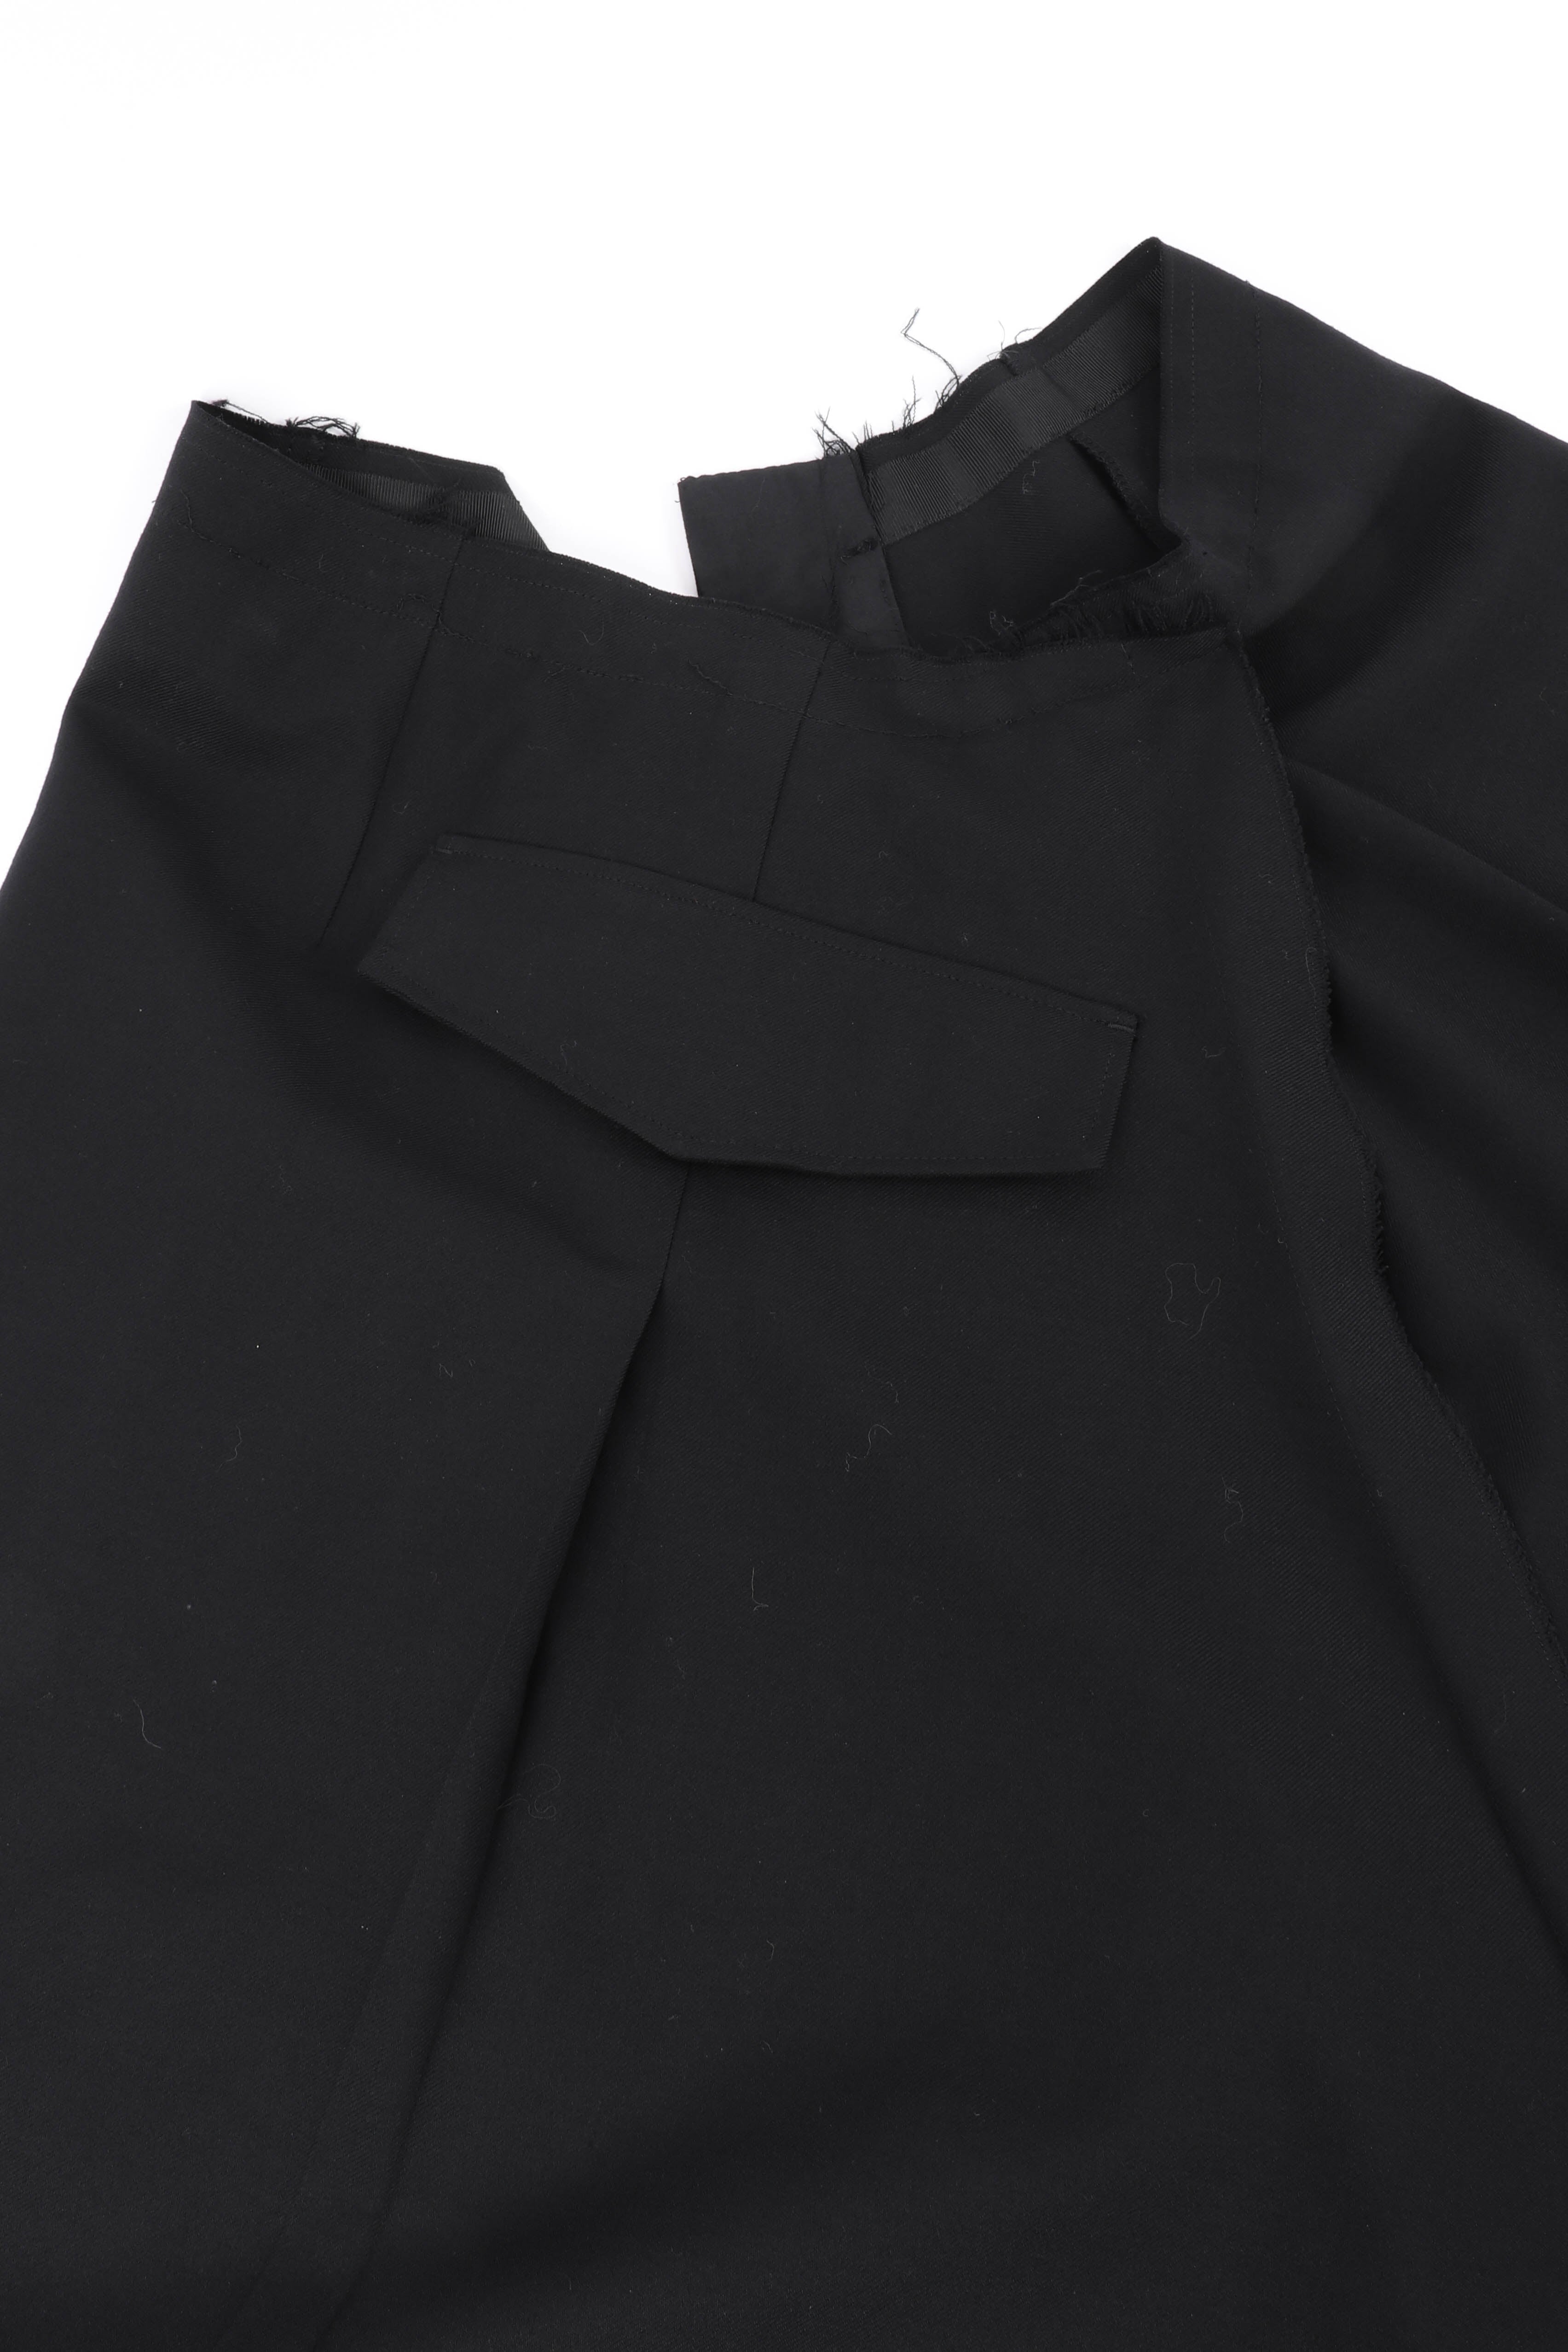 Yohji Yamamoto Asymmetric Hem Skirt back pocket closeup @recessla